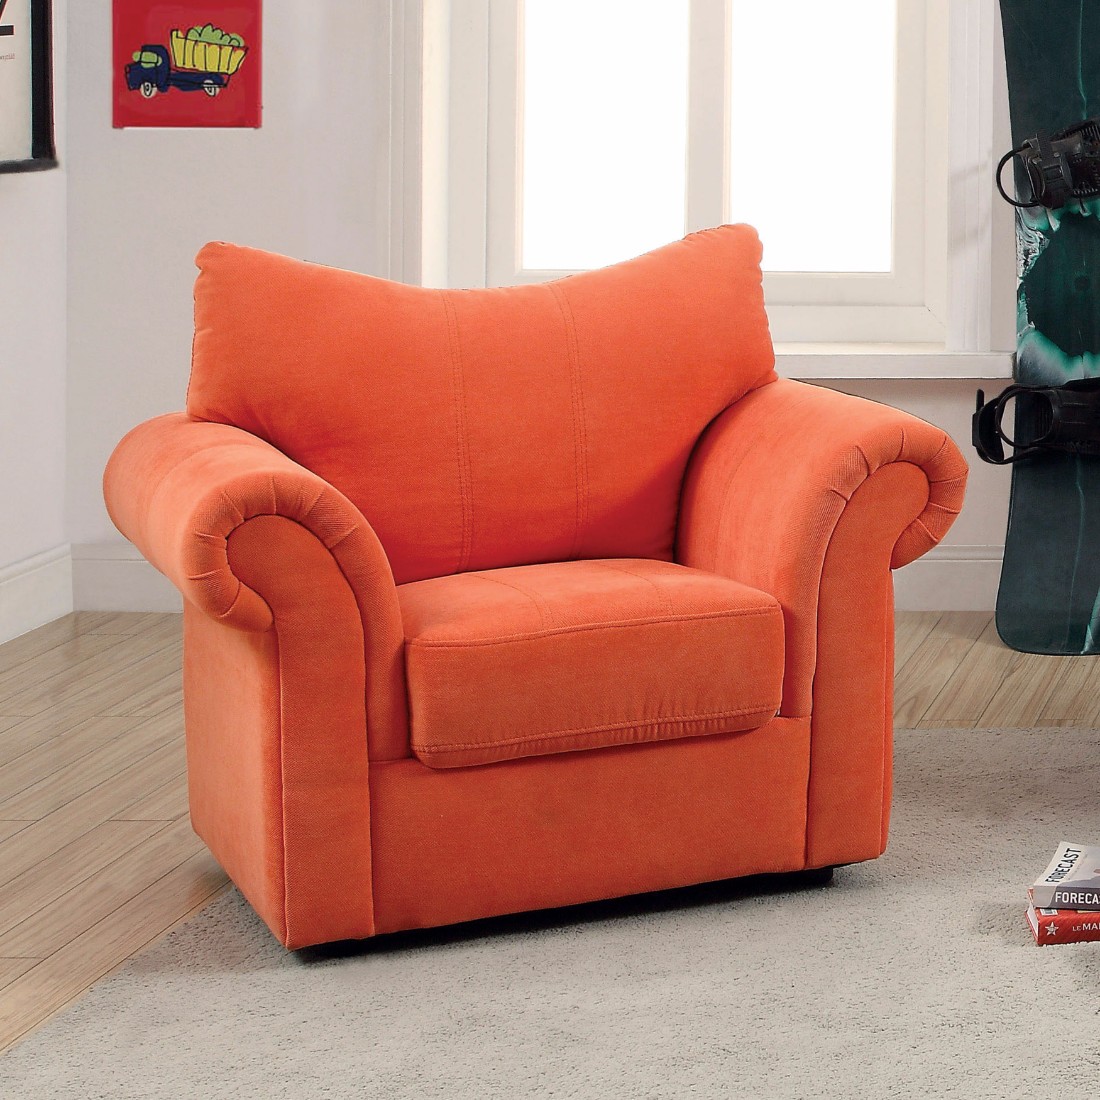 Furniture Of America Lucia Contemporary Plush Kids Chair In Orange - Enitial Lab Idf-6004or